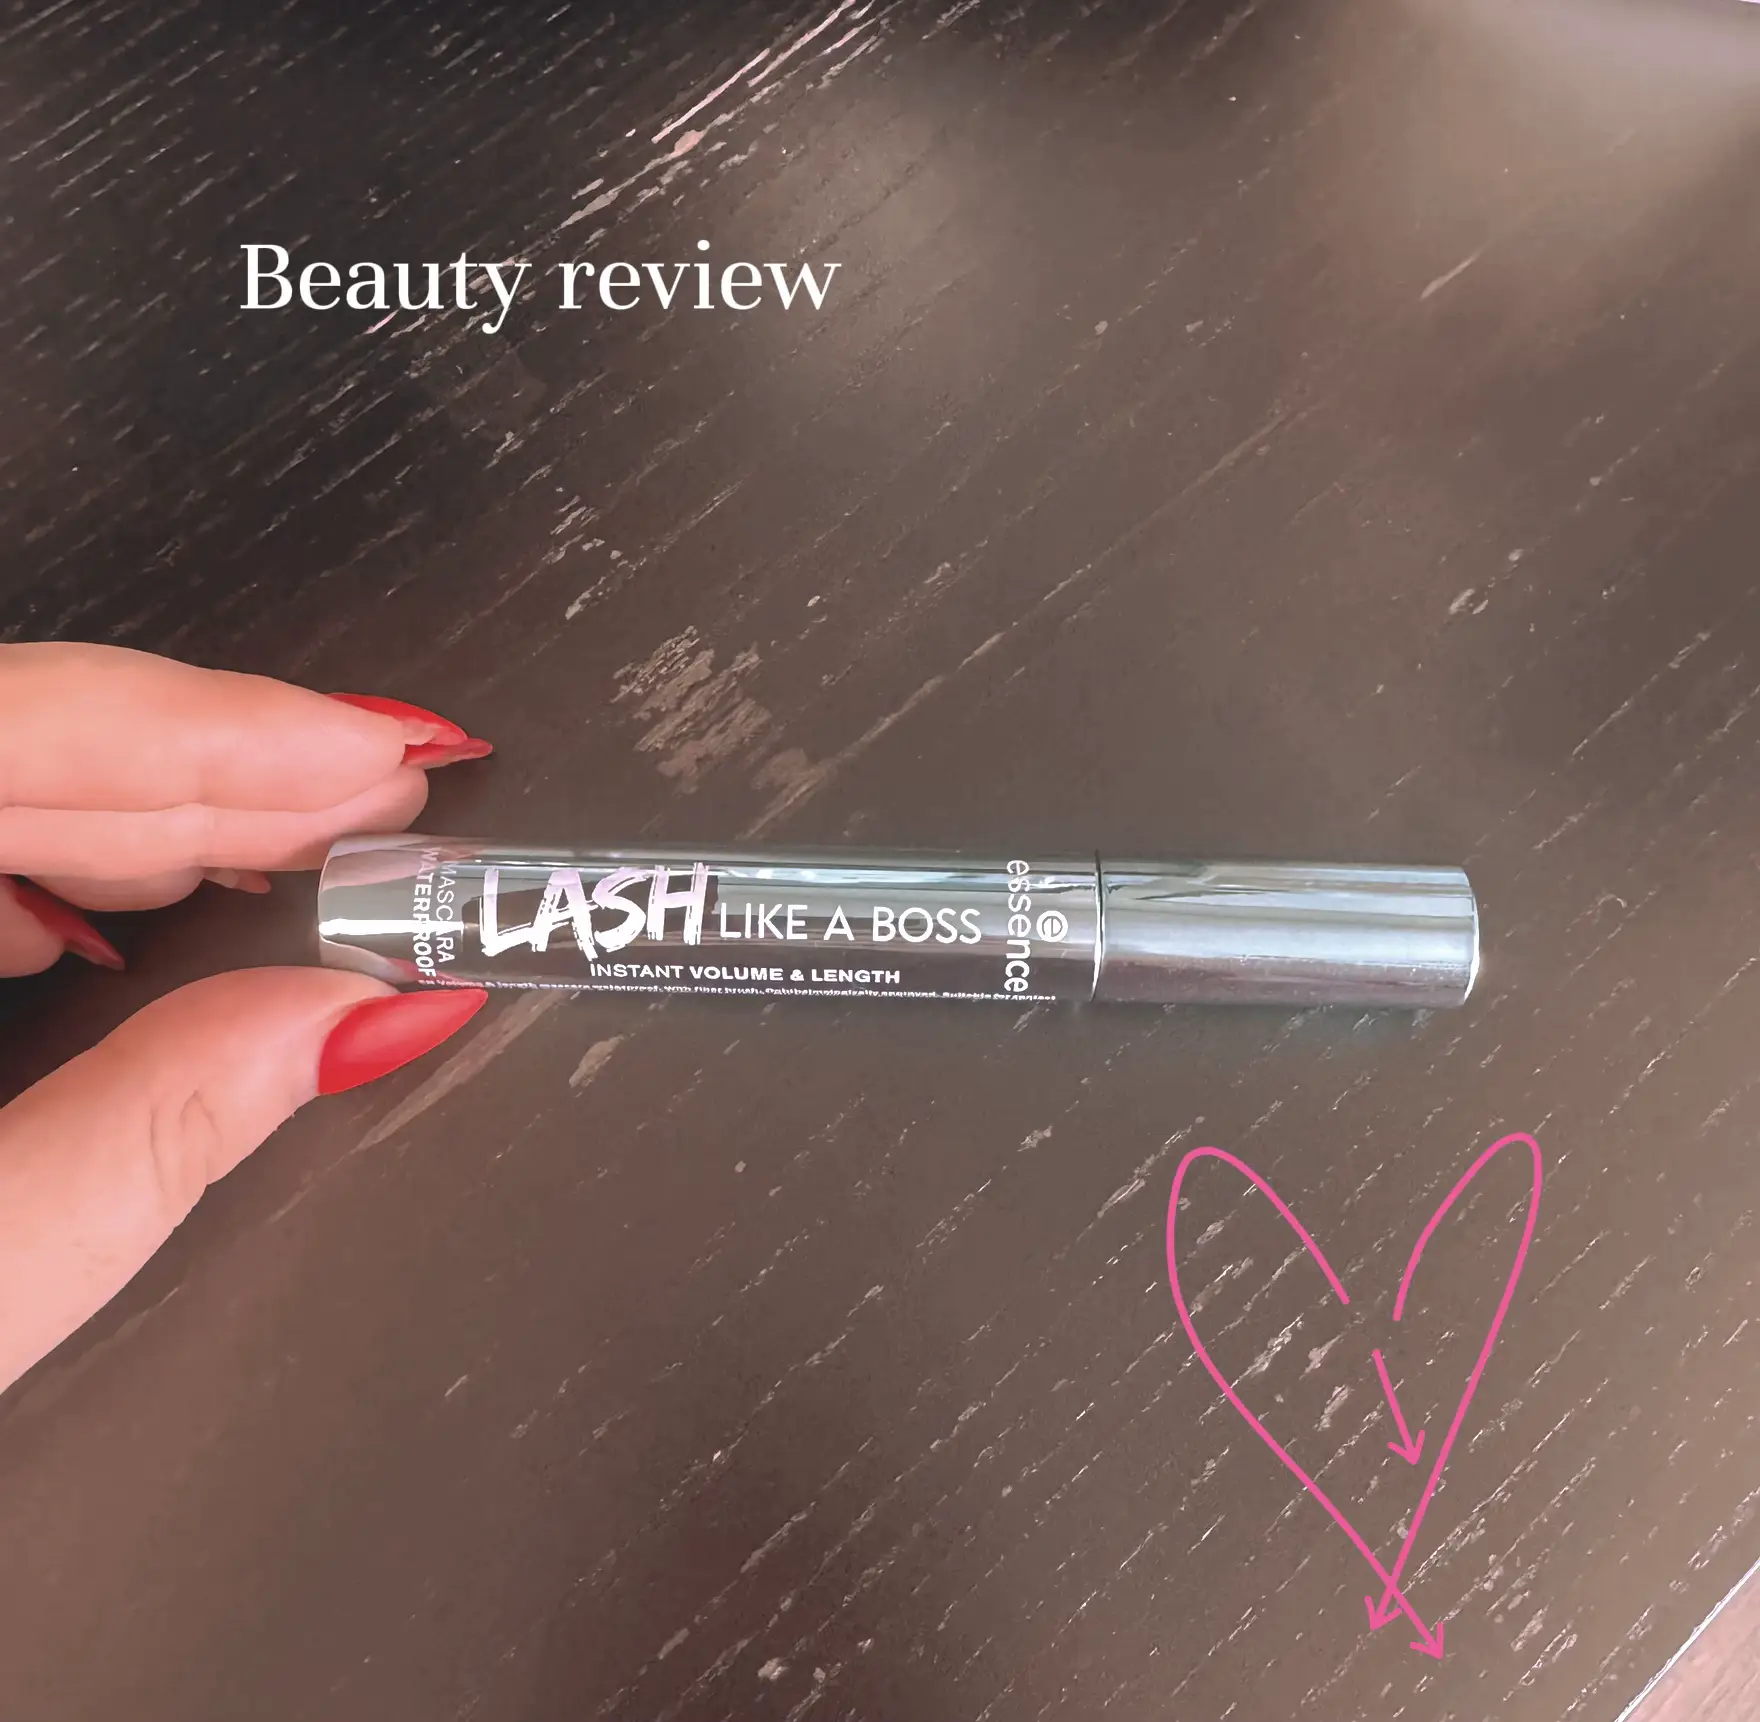 Beauty review | Gallery posted by Bridgetxo2 | Lemon8